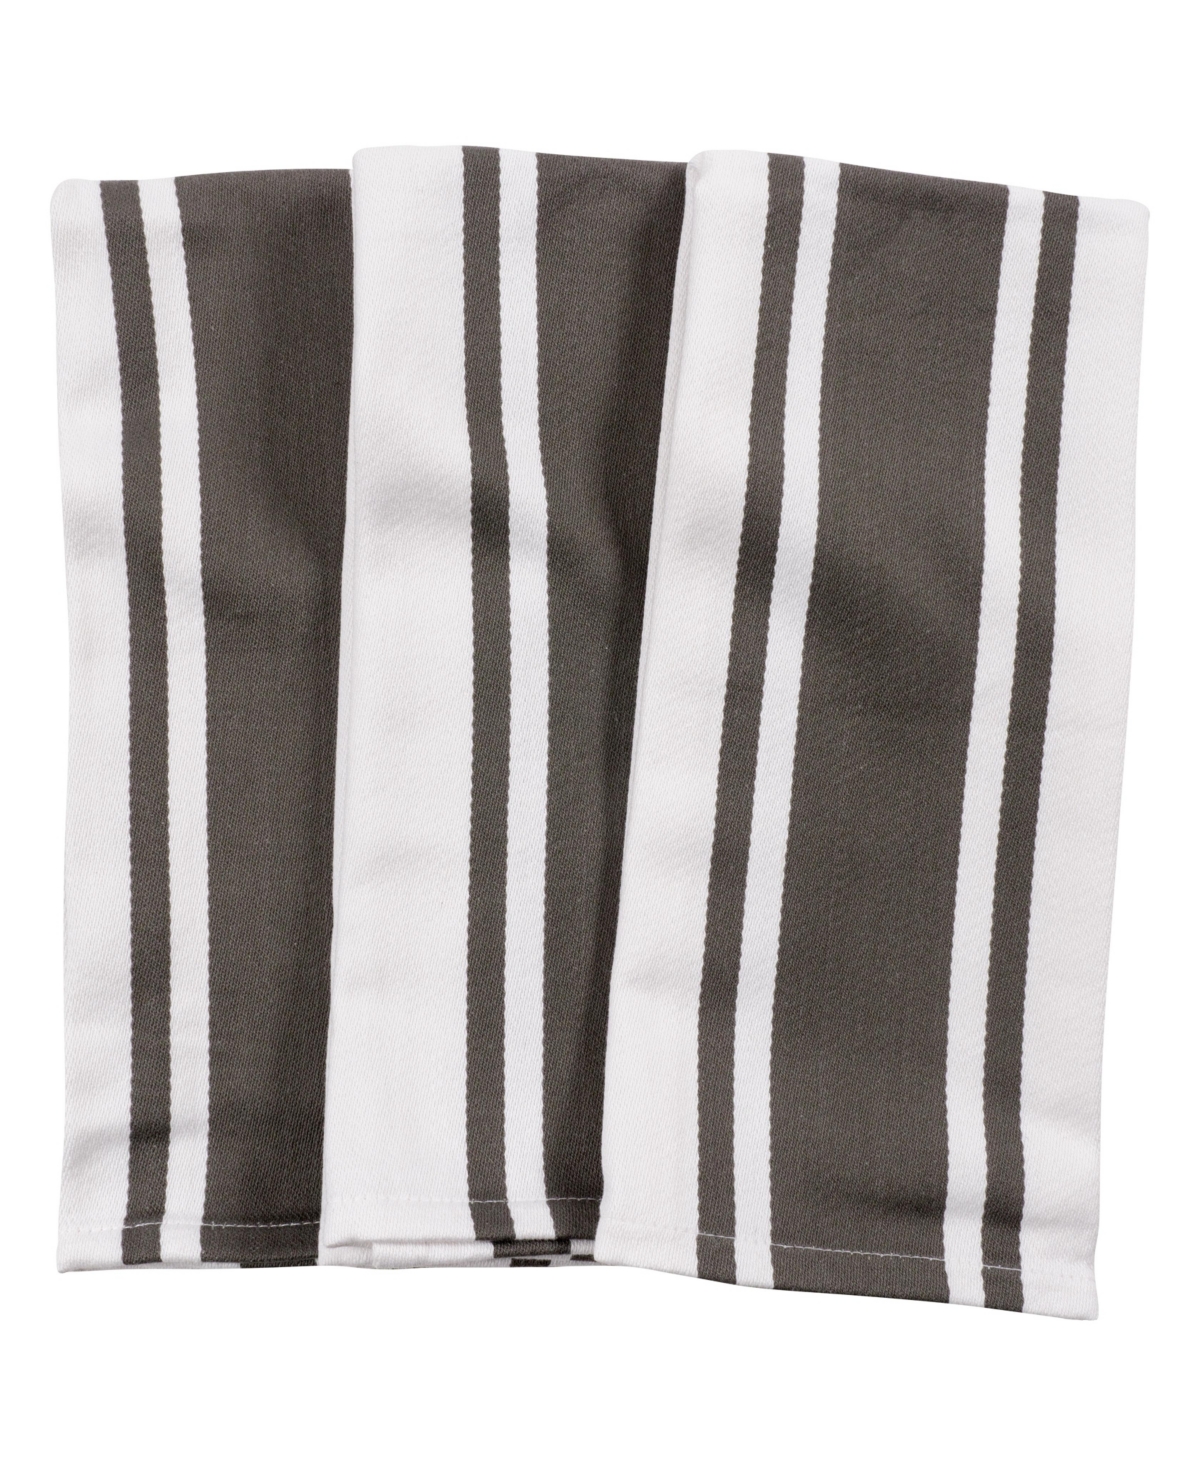 Union Stripe Cotton 3 Piece Kitchen Dish Towel Set, 18" x 28" - Silver